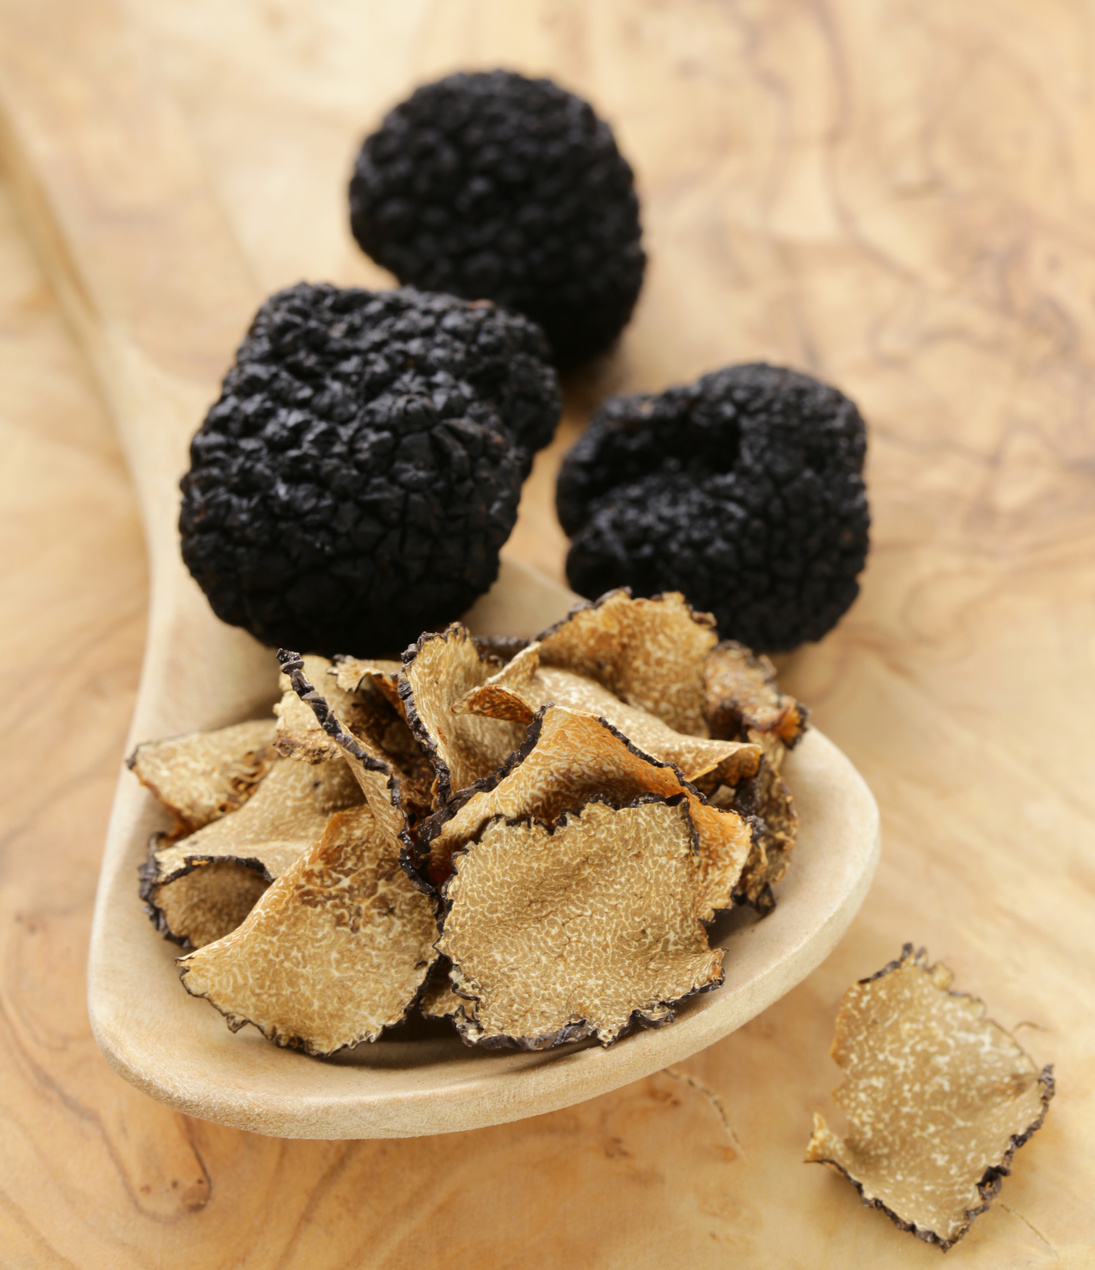 Expensive Rare Black Truffle Mushroom